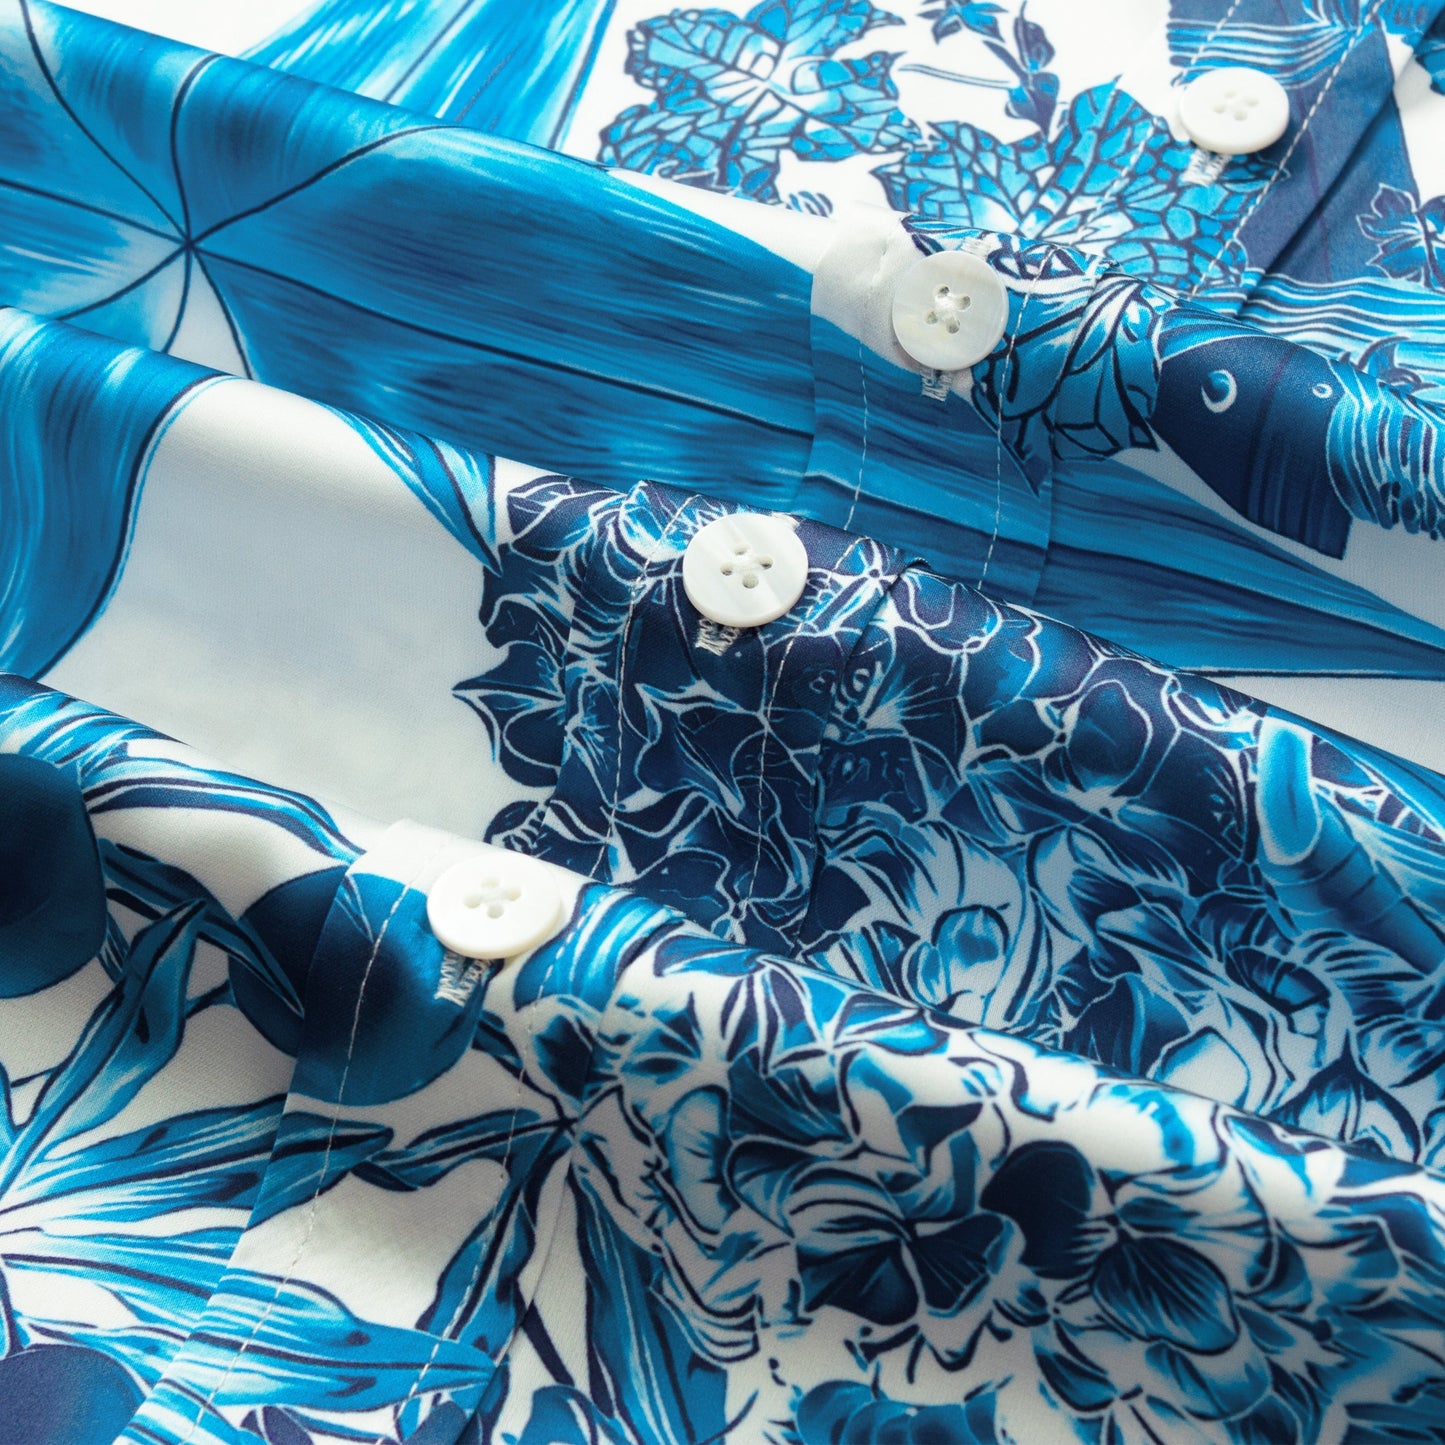 Floral Pattern Short Sleeve Shirt in Blue Jonvidesign